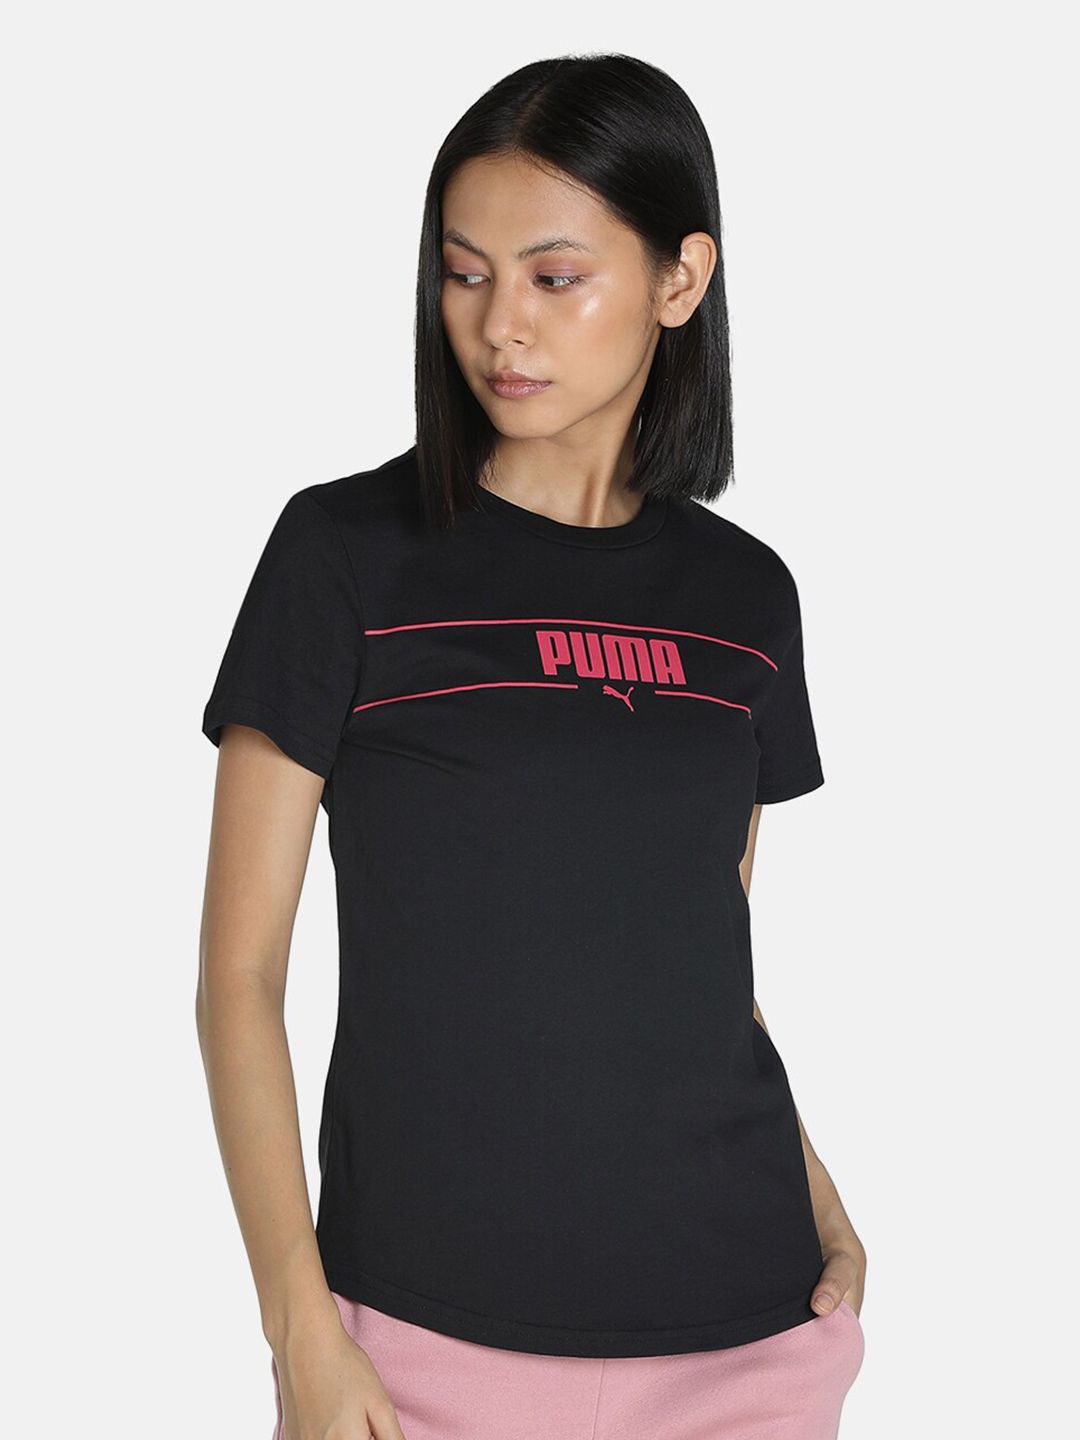 Puma Women Black Brand Logo Printed Training or Gym T-shirt Price in India